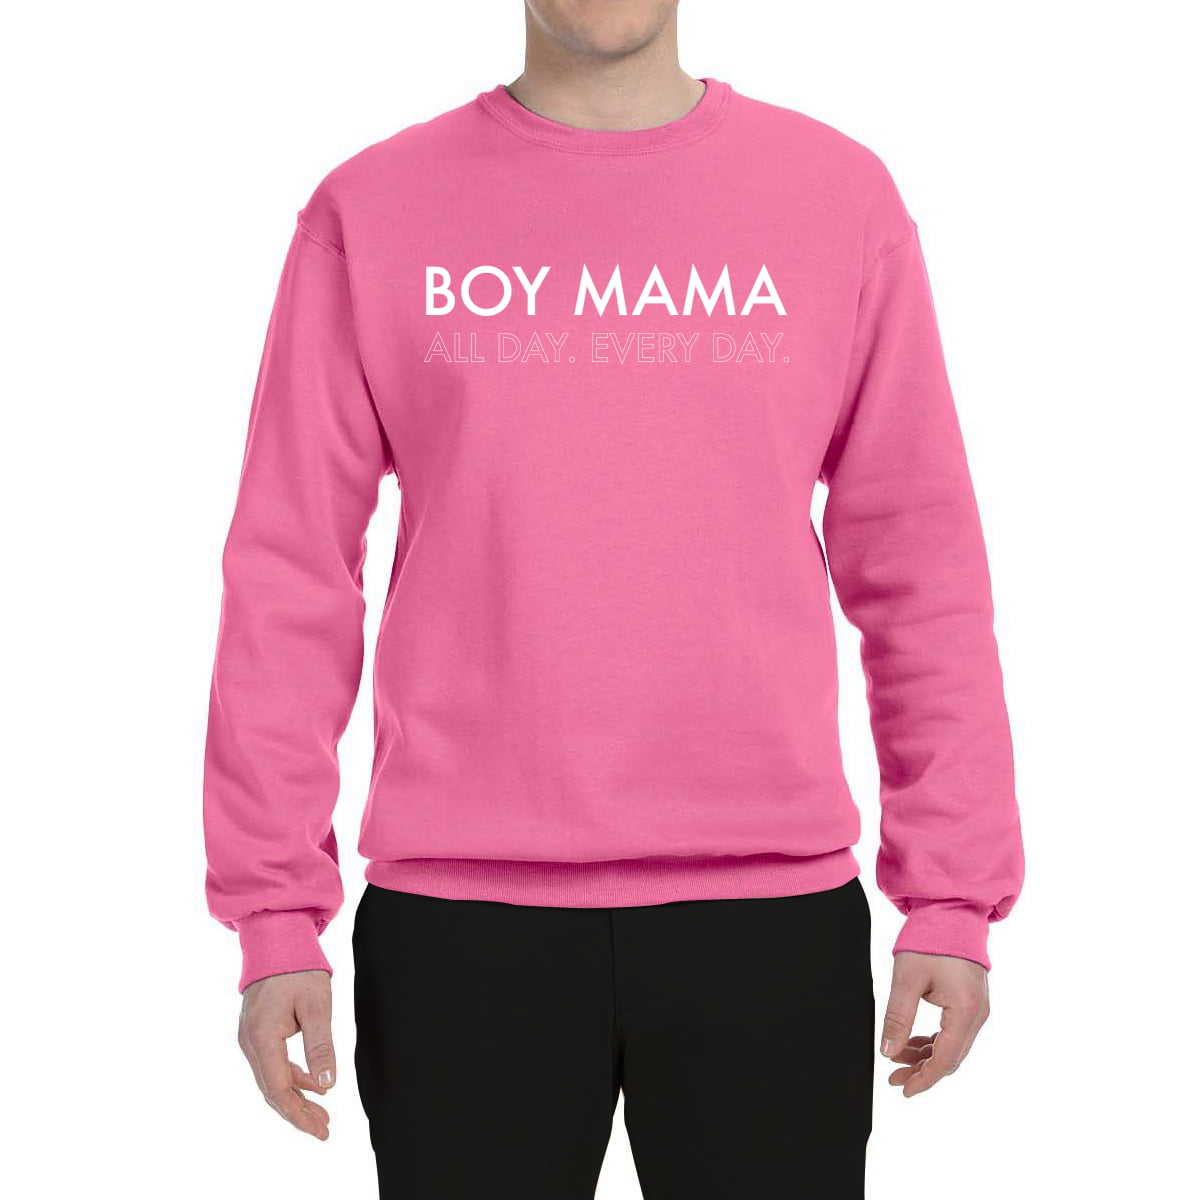 Boy Mom · Creative Fabrica